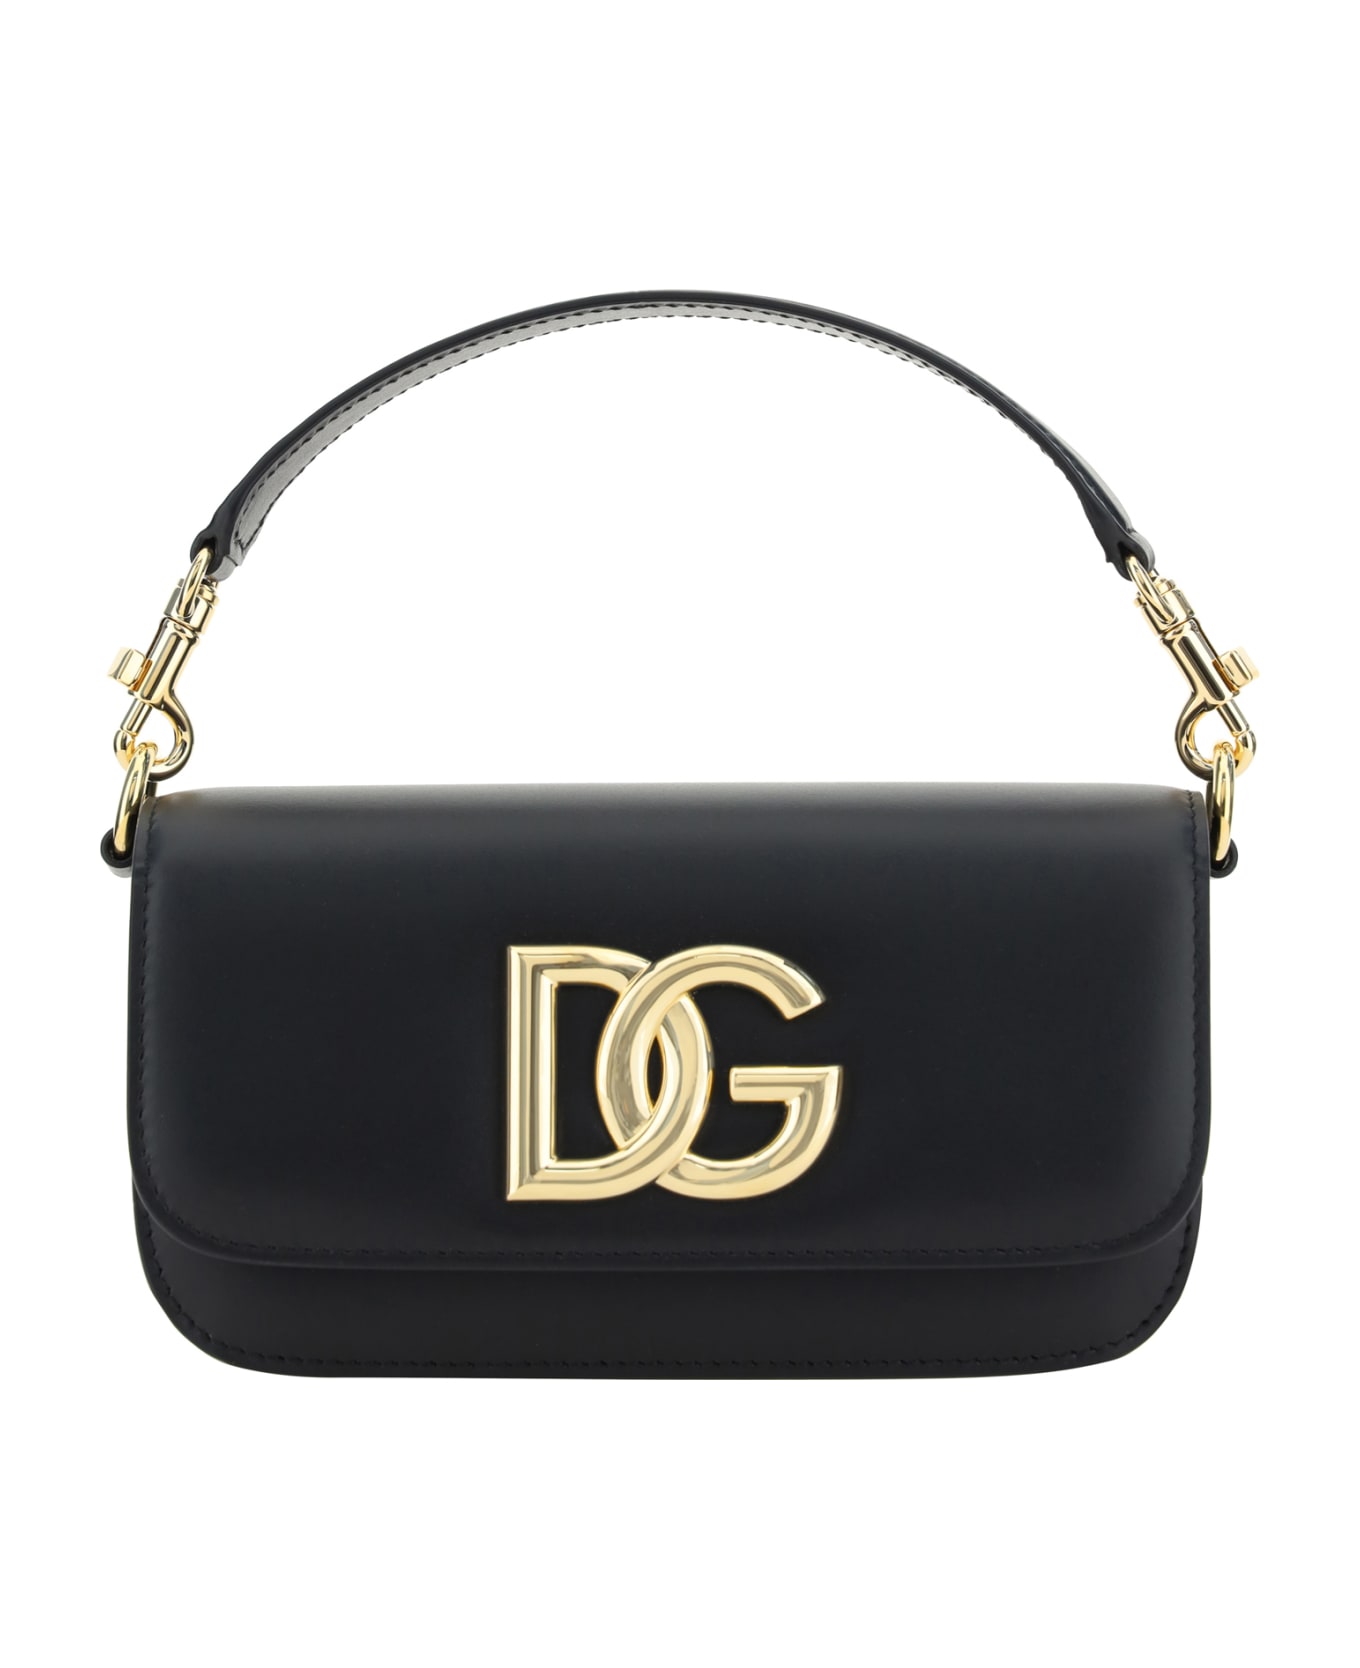 Dolce & Gabbana 3.5 Crossbody Bag - Nero